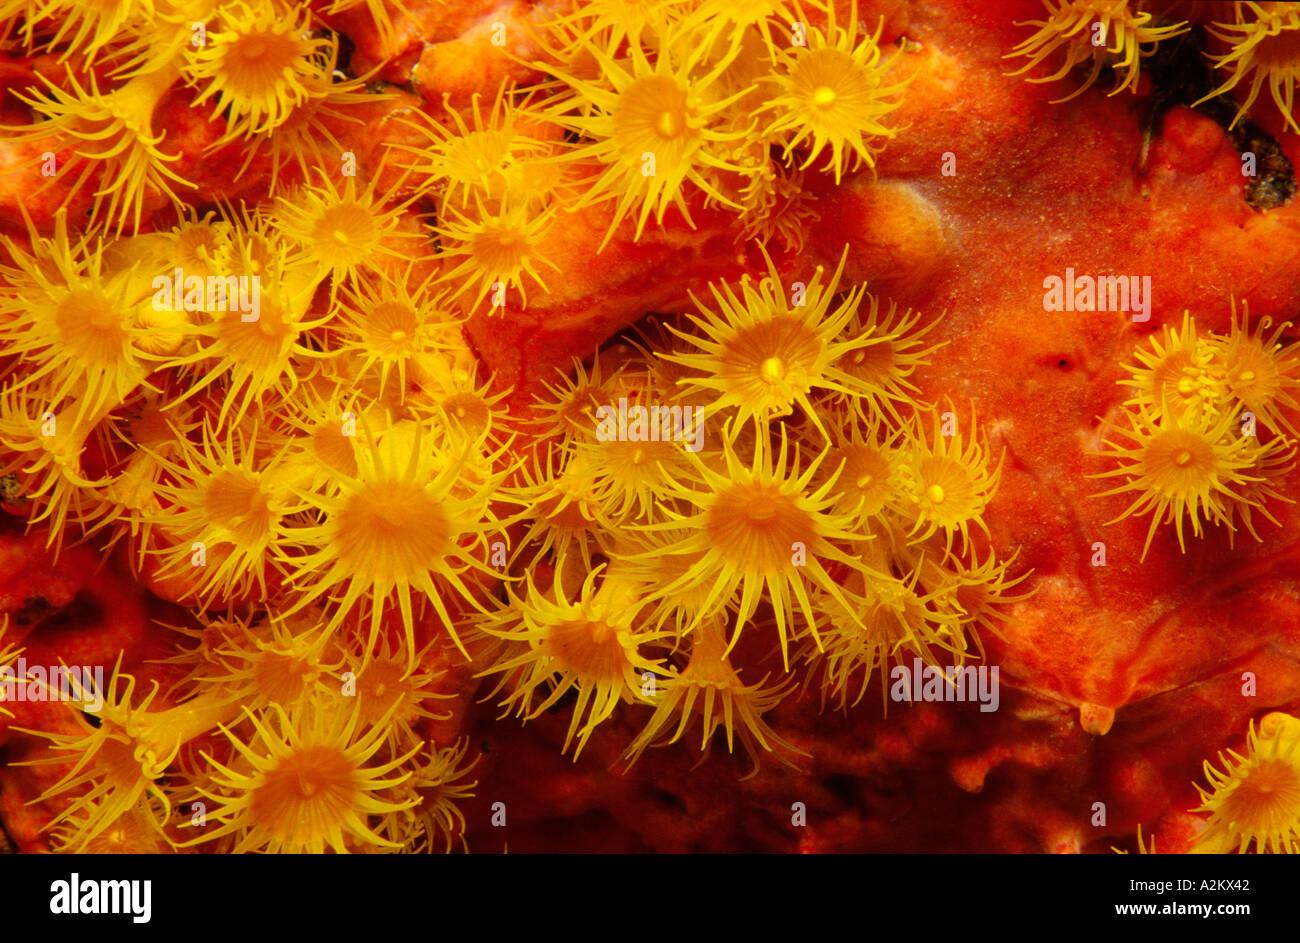 yellow cluster anemones red sponge, Parazoanthus axinellae Spirastrella cunctatrix Stock Photo